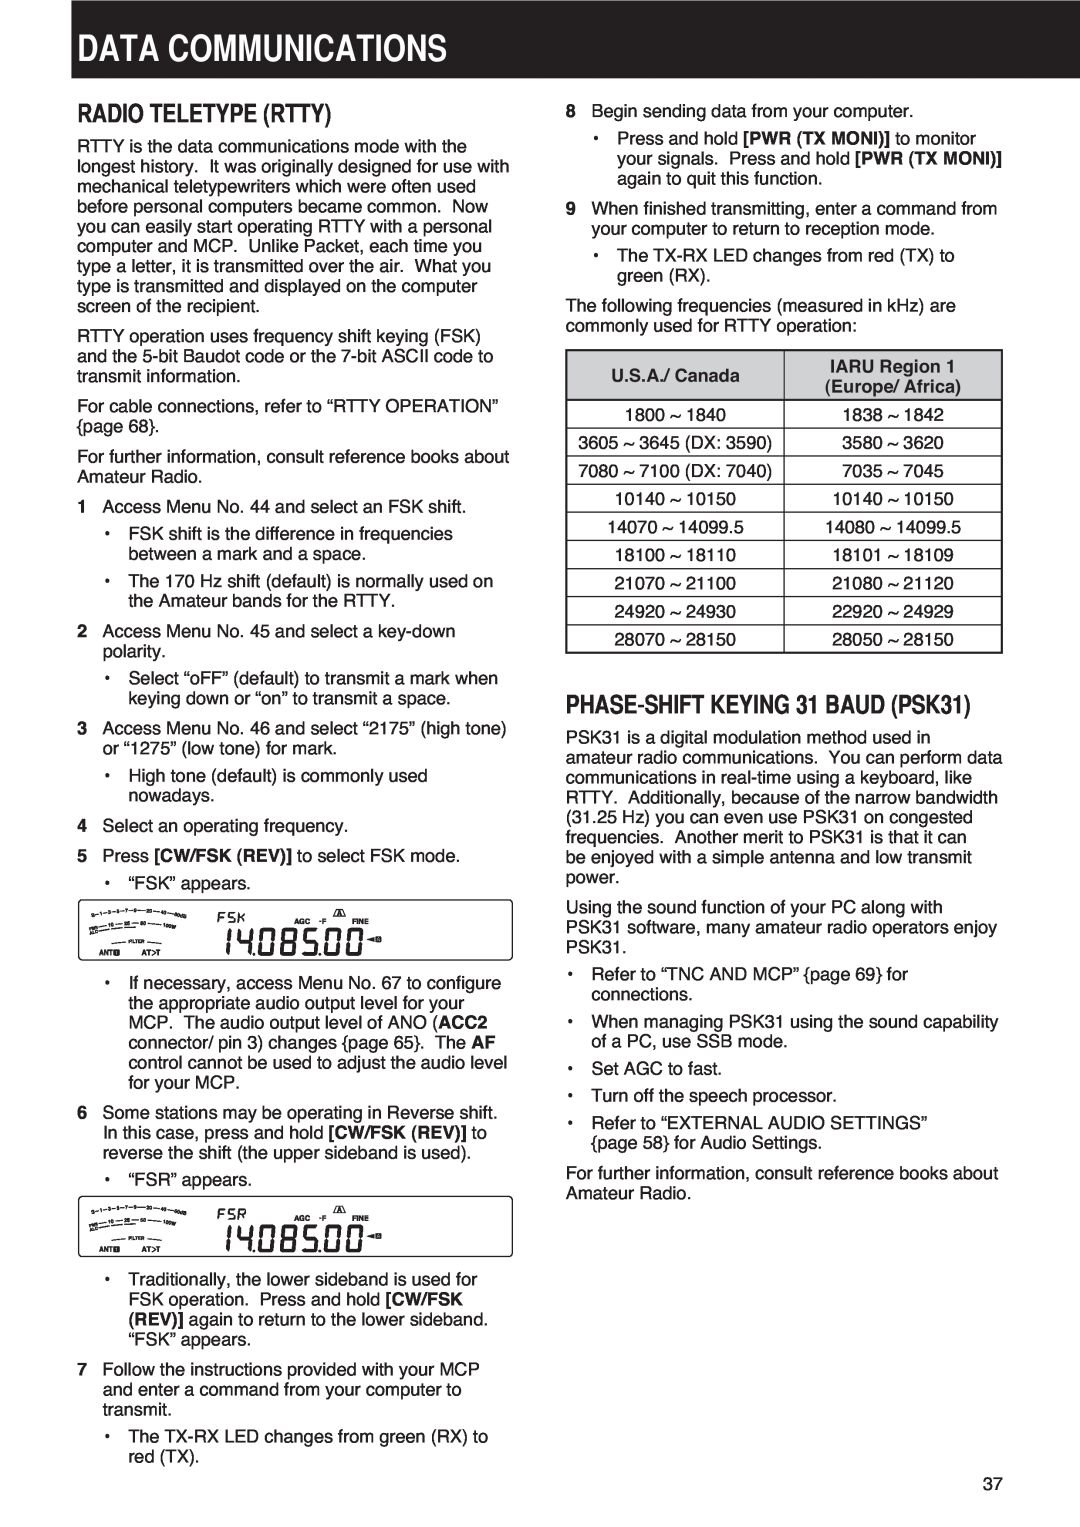 Kenwood TS-590S instruction manual $7$&20081,&$7,216, 5$,27/7<3577<, 3+$66+,7.<,1*%$836. 